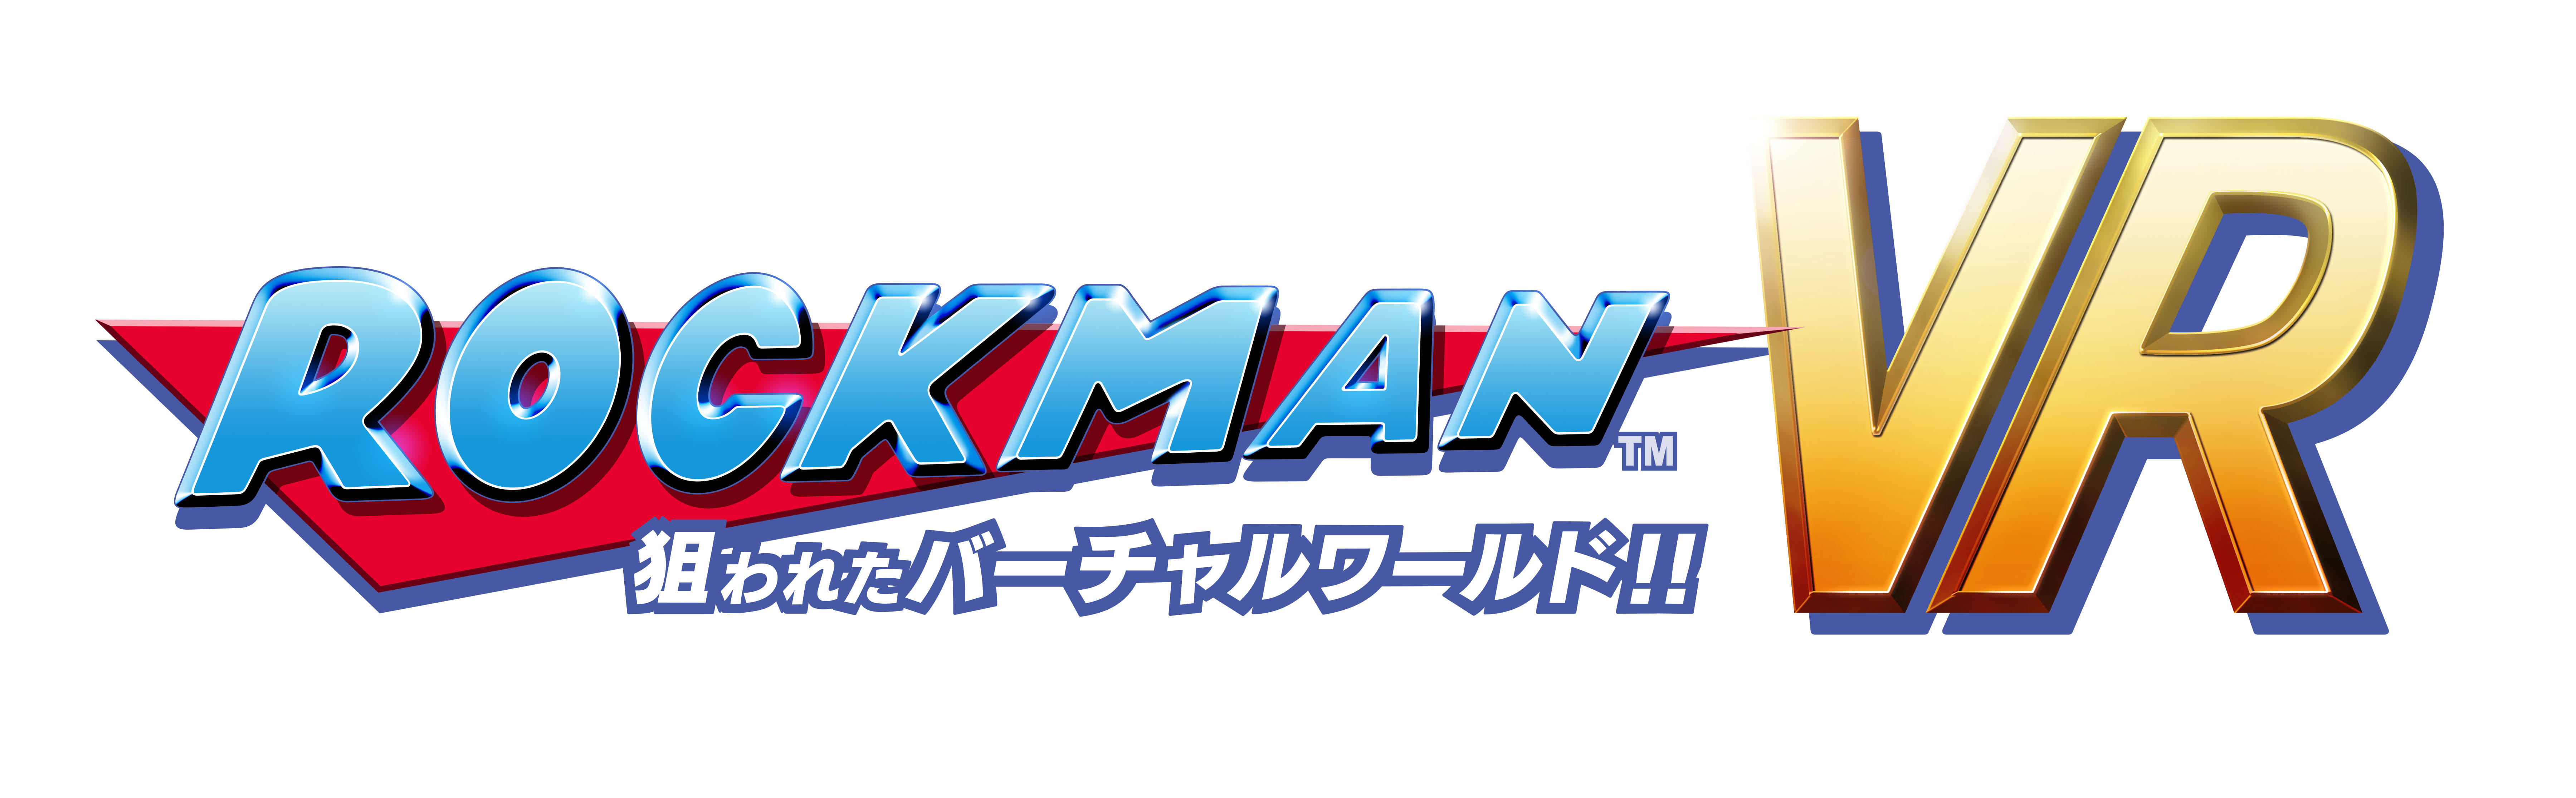 ROCKMAN_VR_logo.jpg